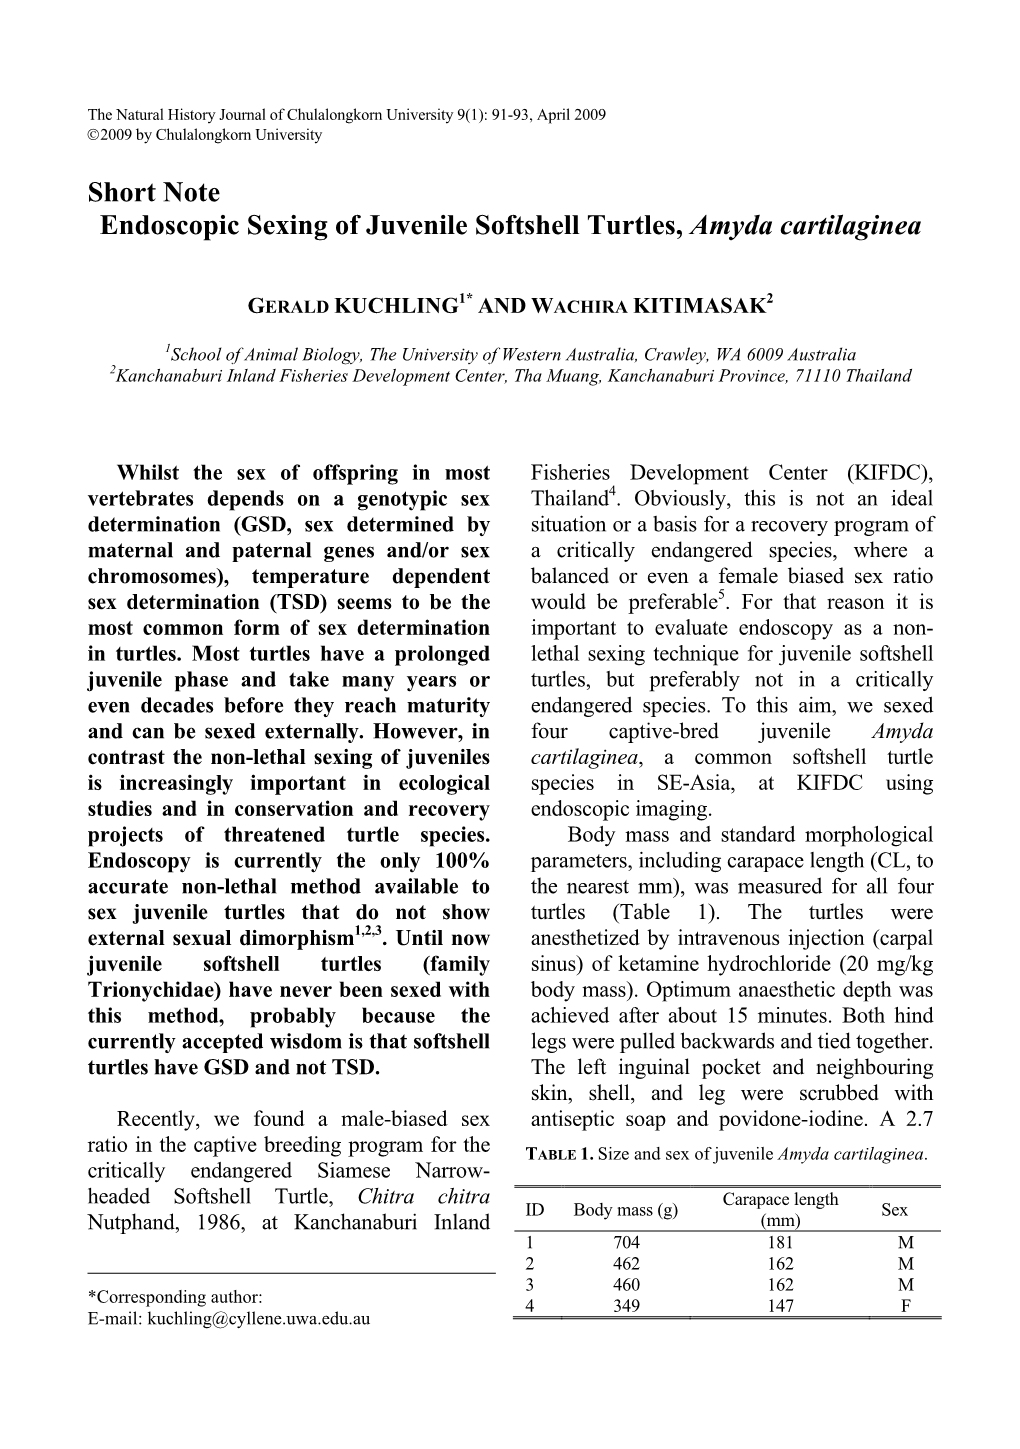 Short Note Endoscopic Sexing of Juvenile Softshell Turtles, Amyda Cartilaginea